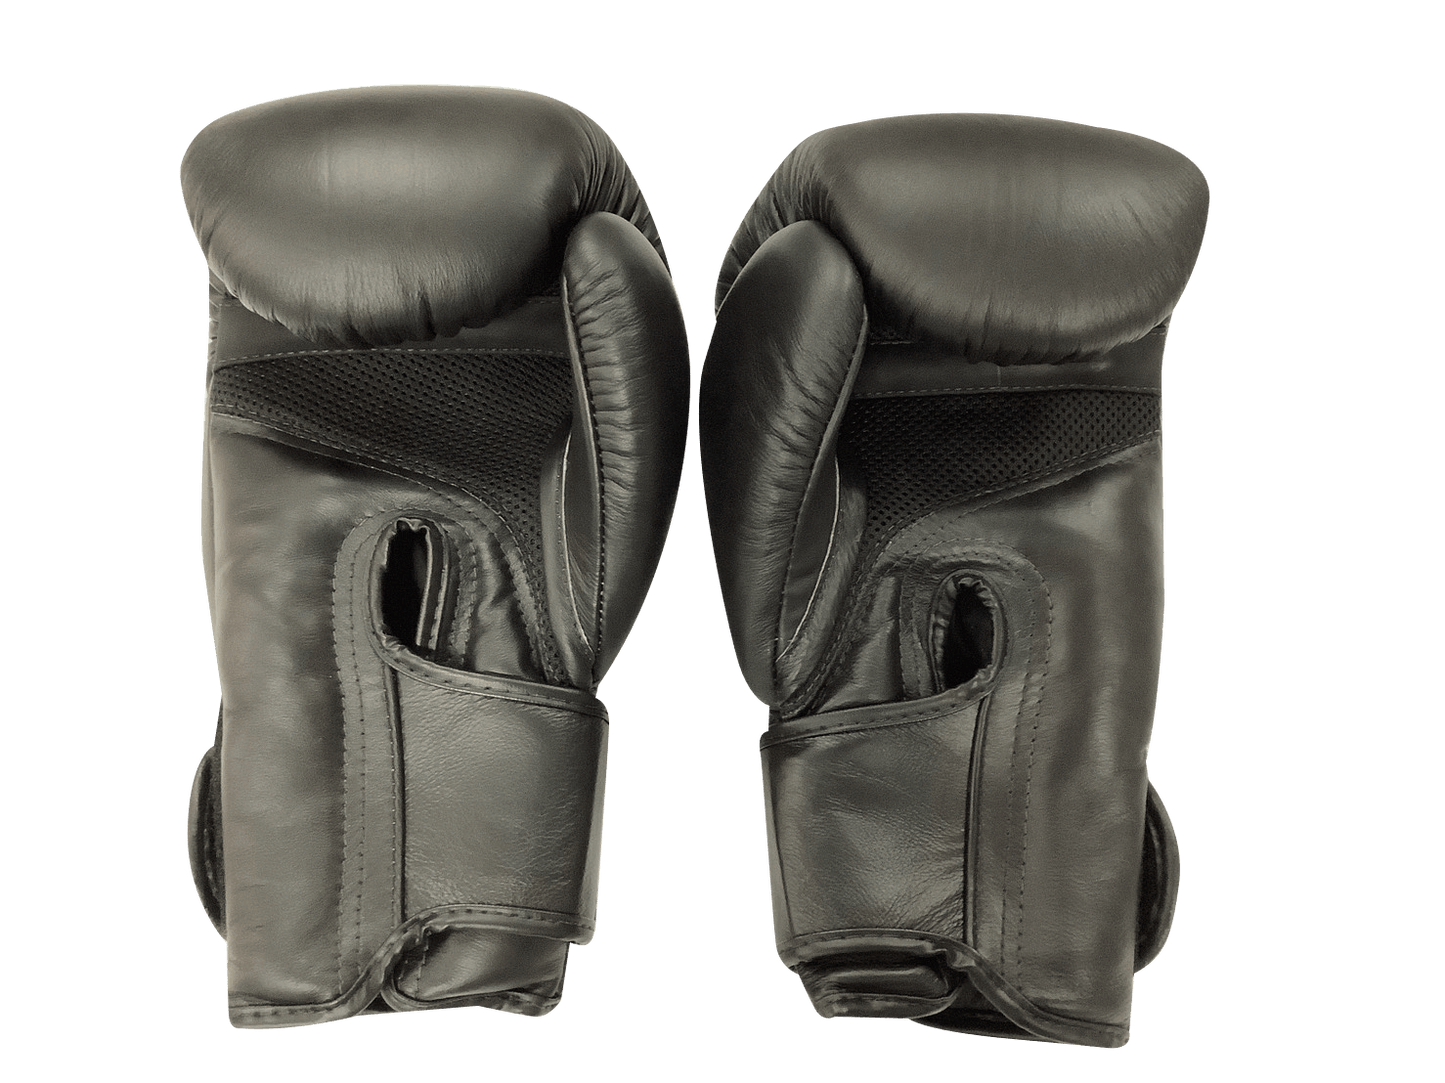 Top King Boxing Gloves "Super" TKBGSA Air Black Top King